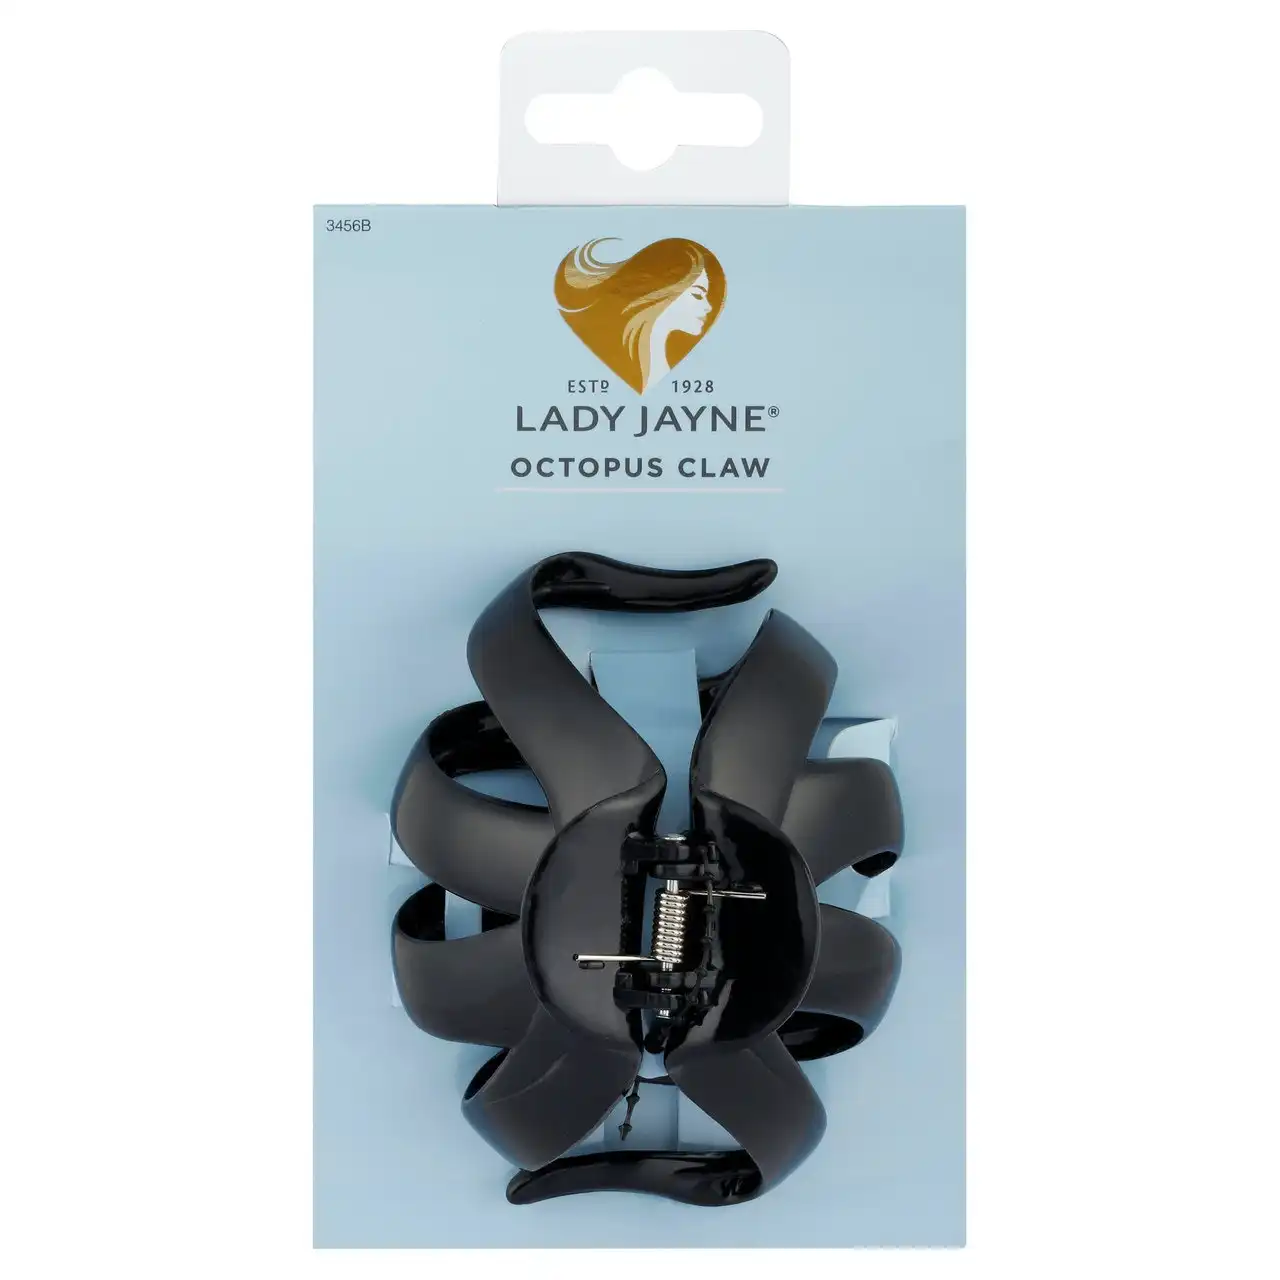 Lady Jayne Black Octopus Claw